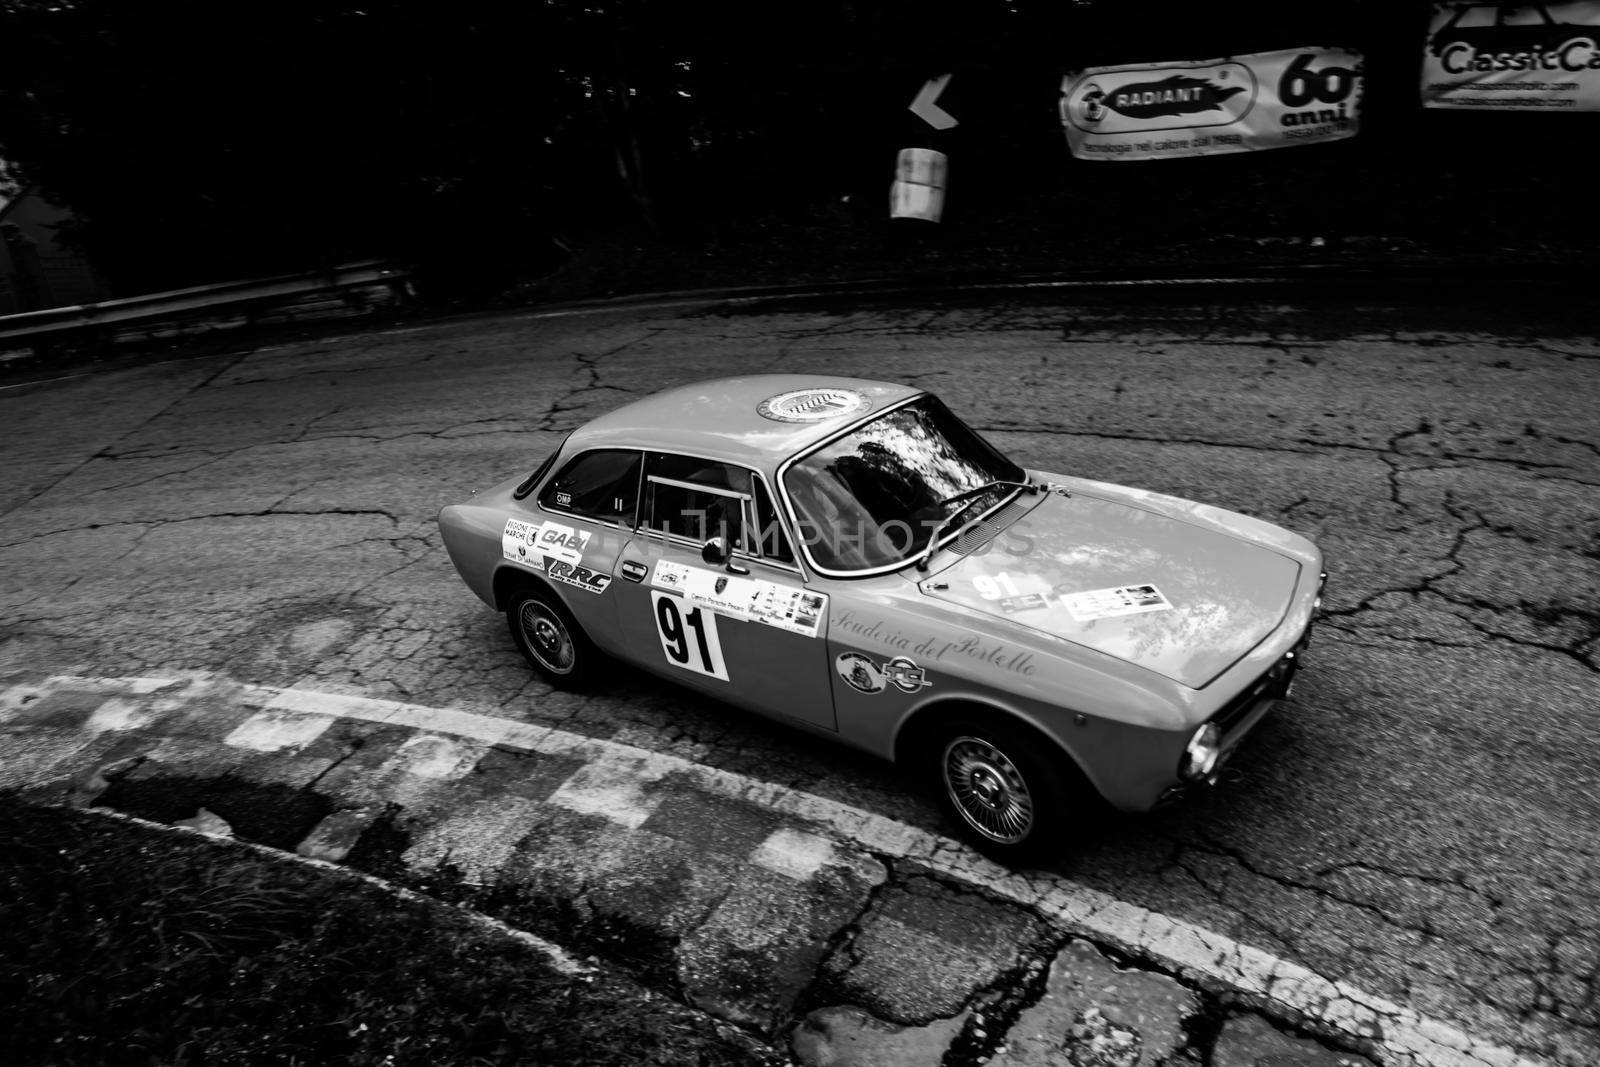 PESARO COLLE SAN BARTOLO , ITALY - OTT 10 - 2021 : ALFA ROMEO JUNIOR SCALINO on an old racing car in rally